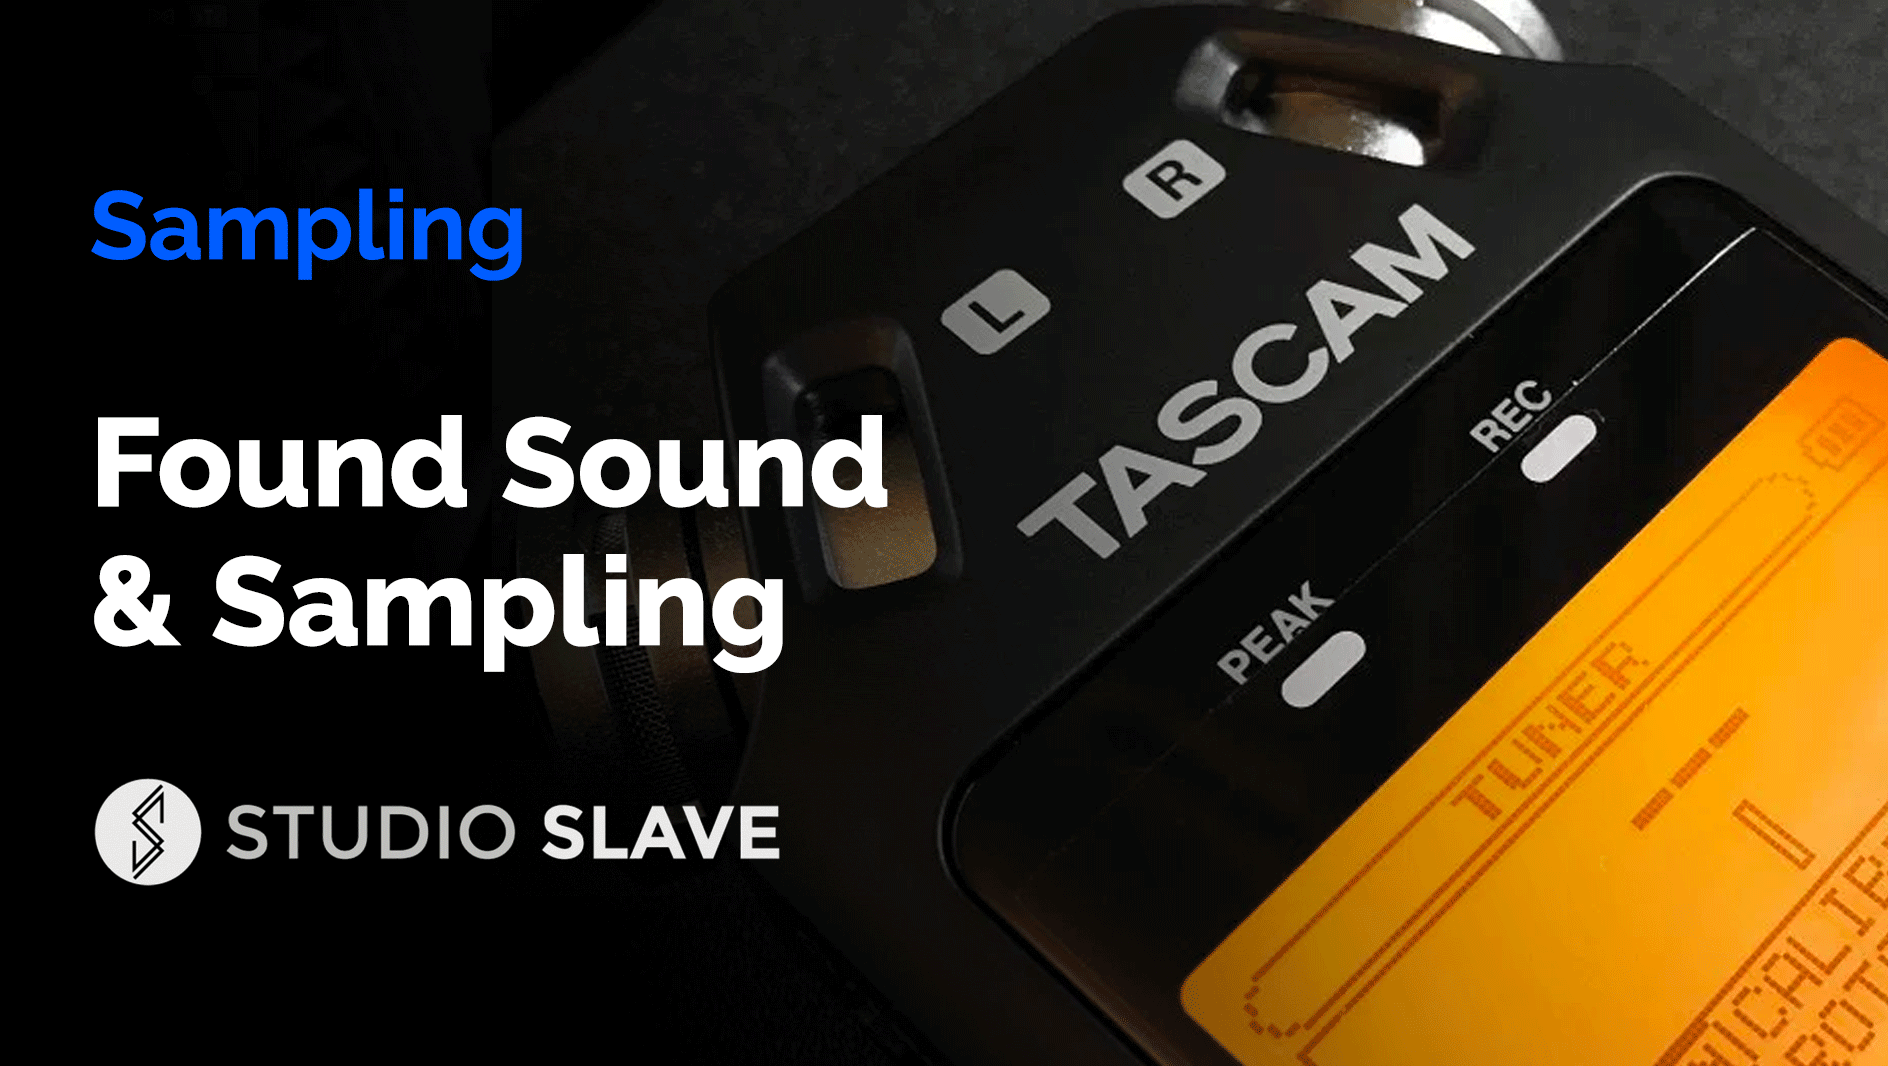 Found Sound & Sampling